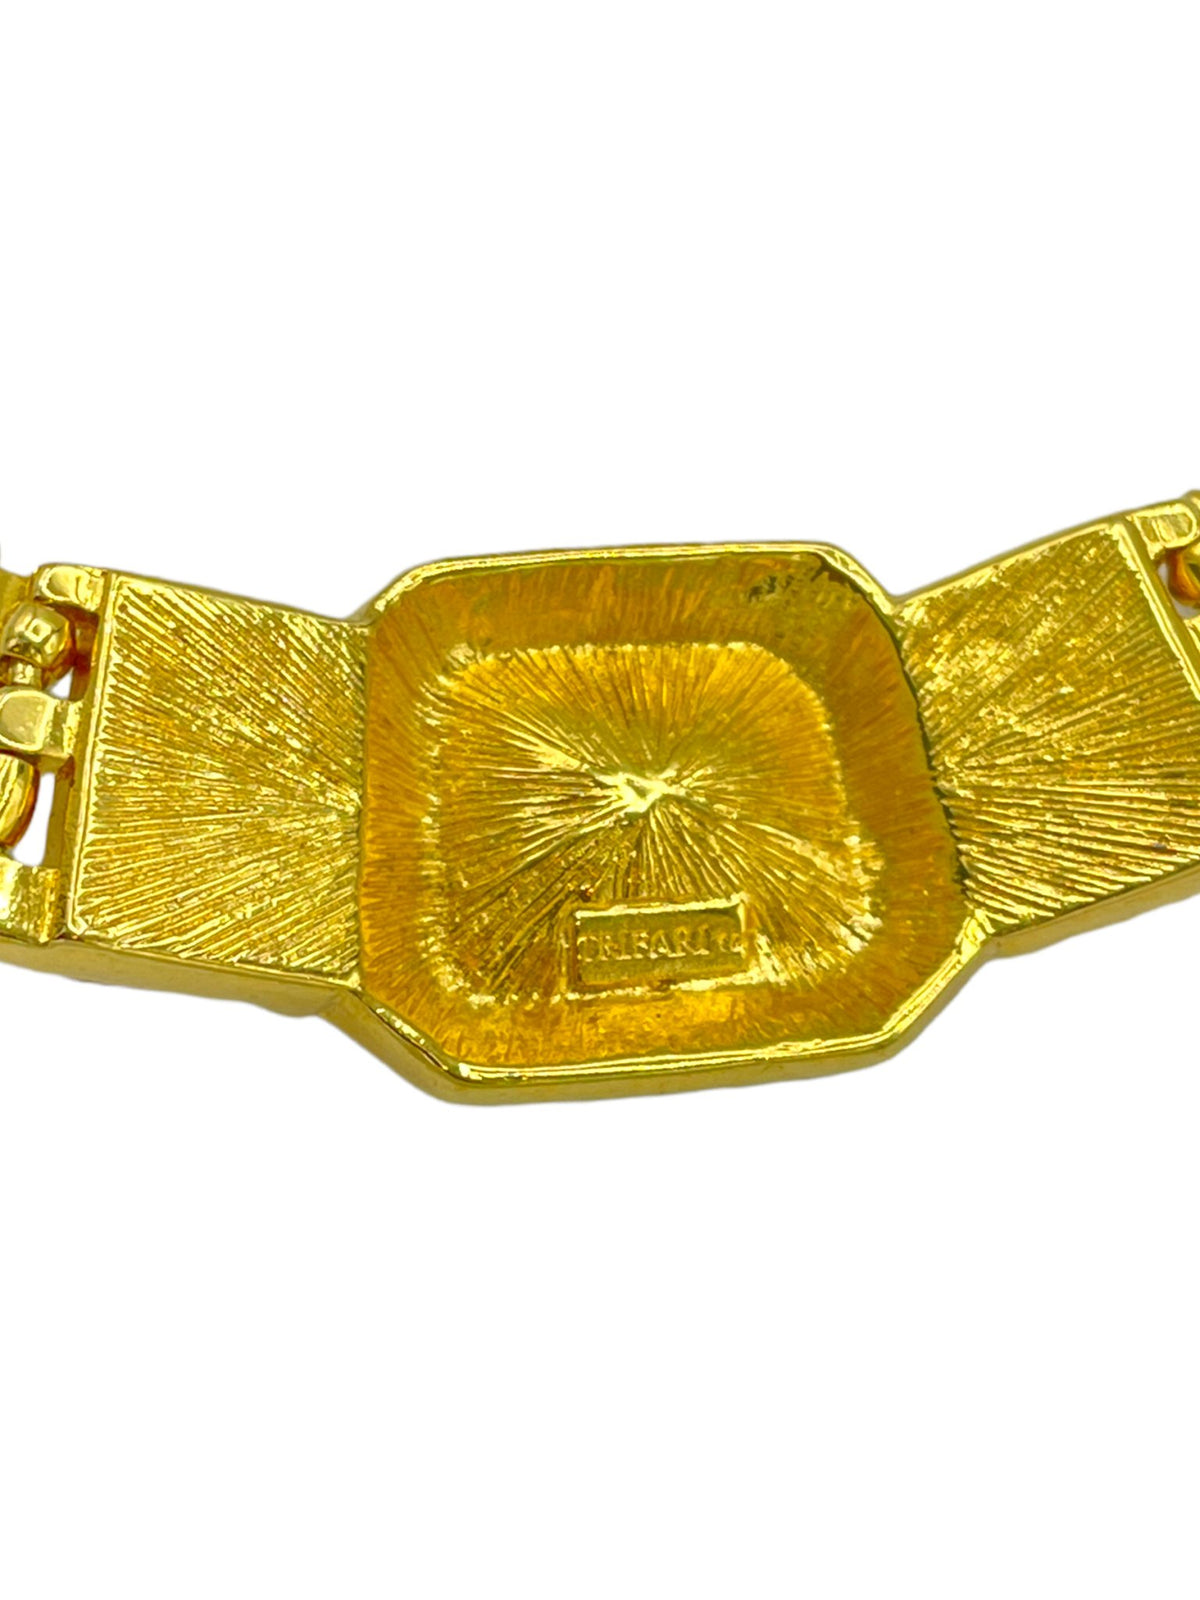 Trifari Gold Link Necklace with Large Black Enamel Medallion Pendant - 24 Wishes Vintage Jewelry